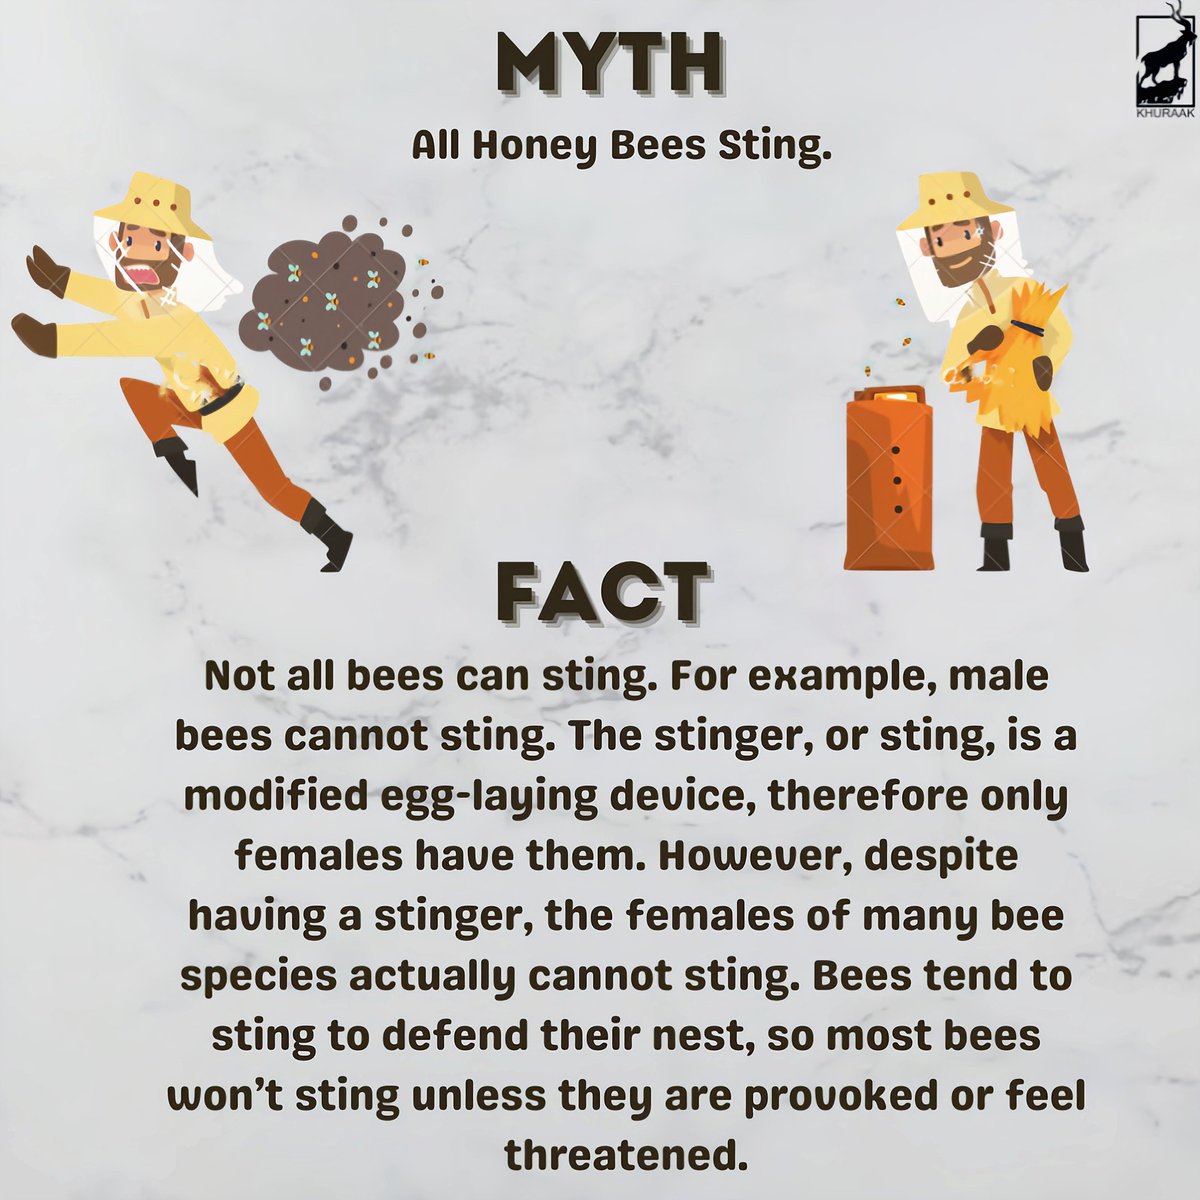 Myth vs Facts about Honey Bees.
#Honey #honeybee #myth #FactCheck